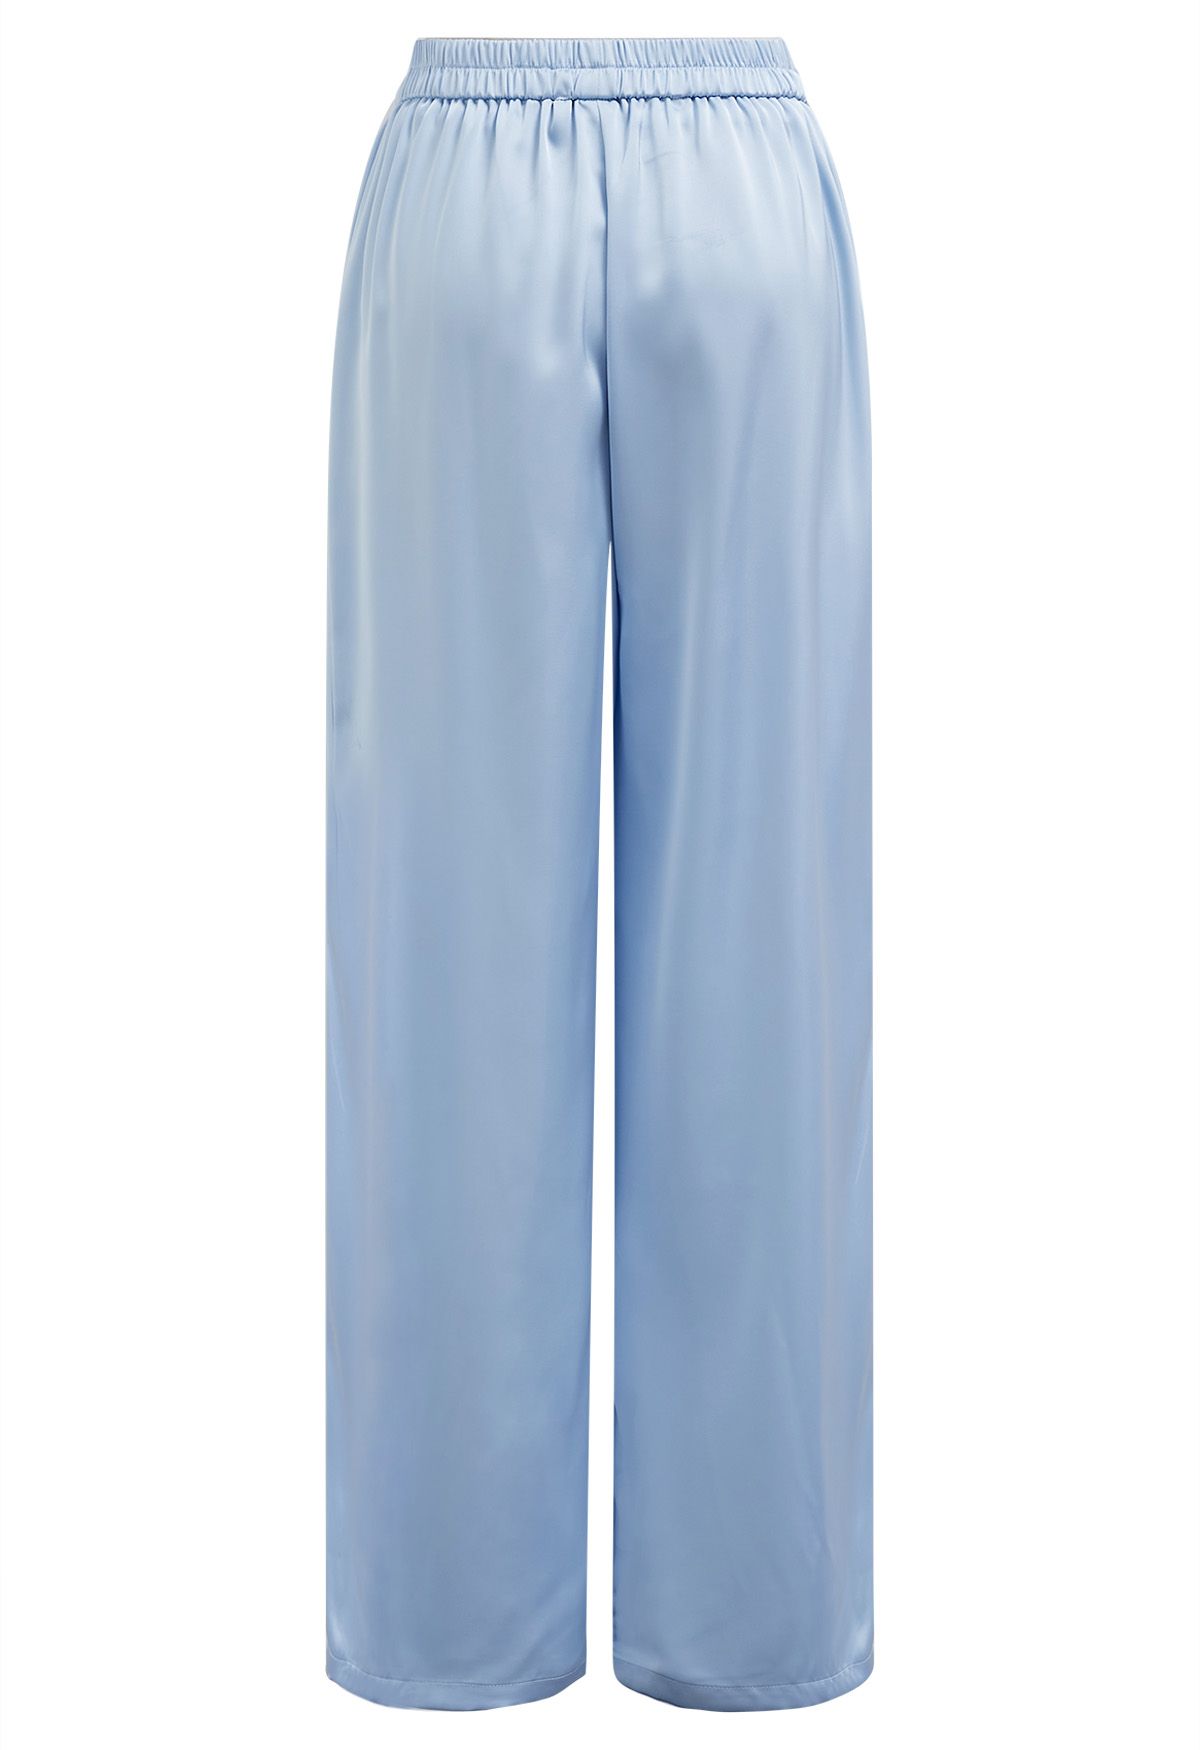 Pantalon à enfiler finition satinée en bleu